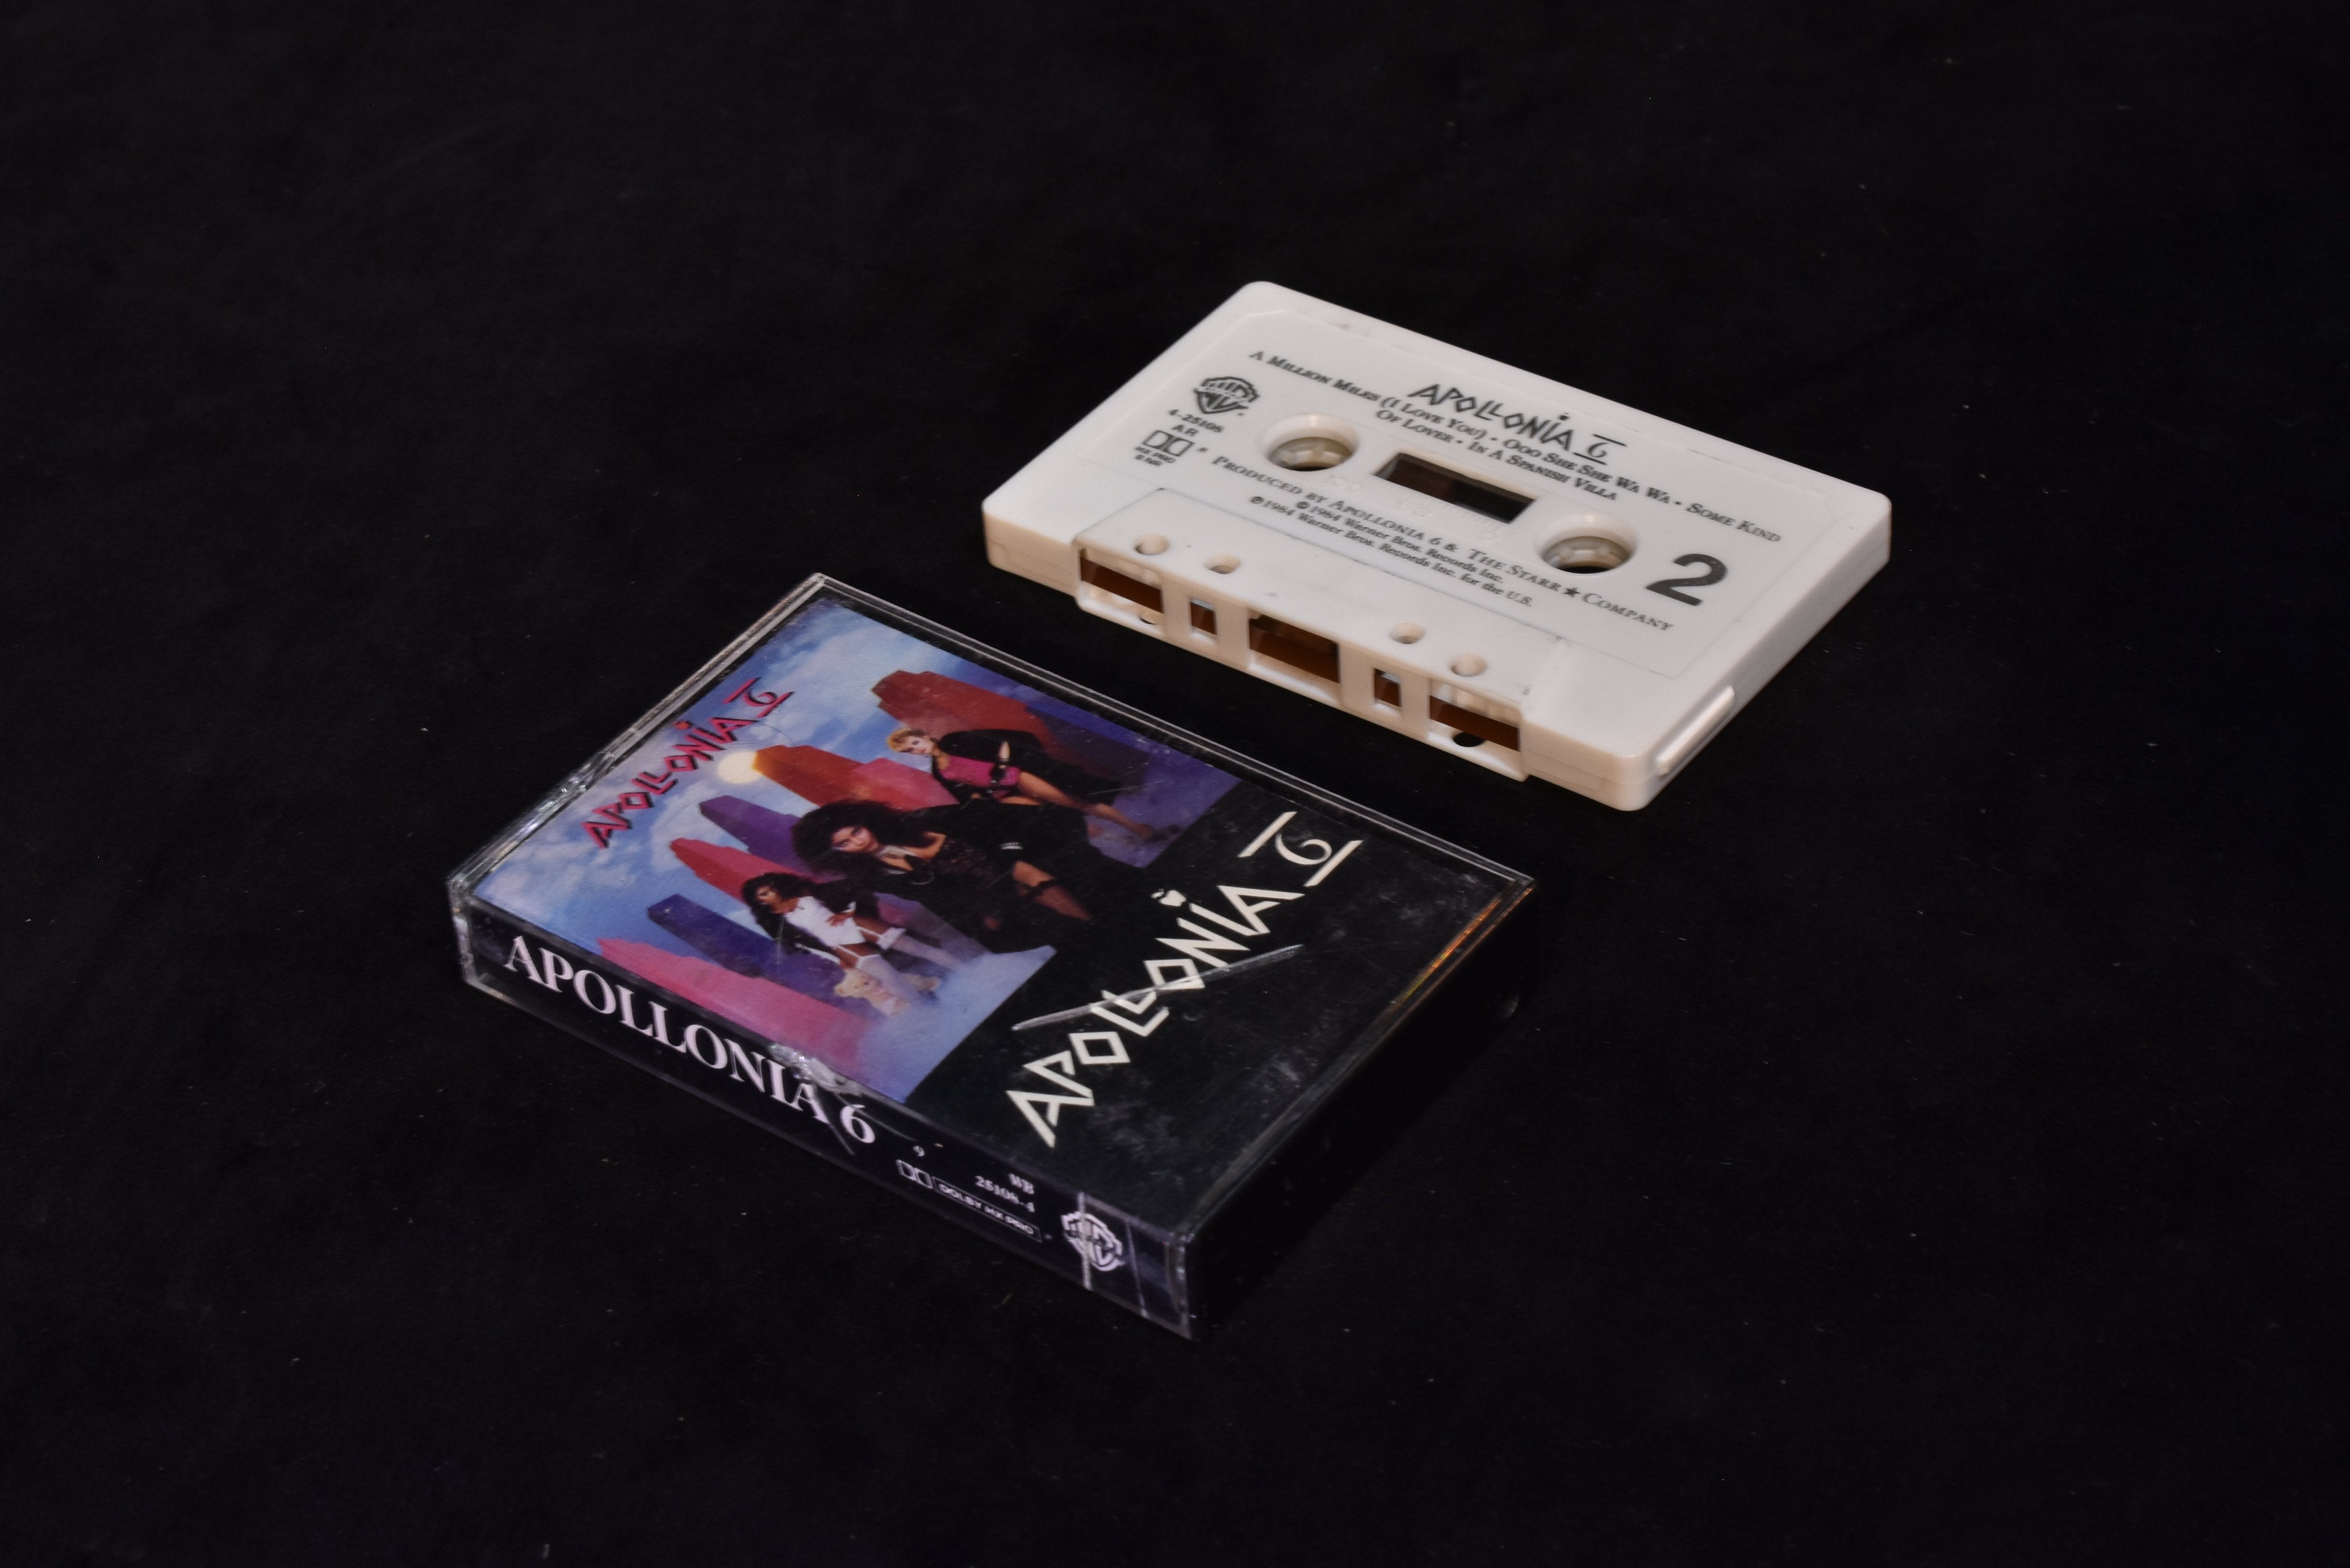 Apollonia 6 cassette tape used